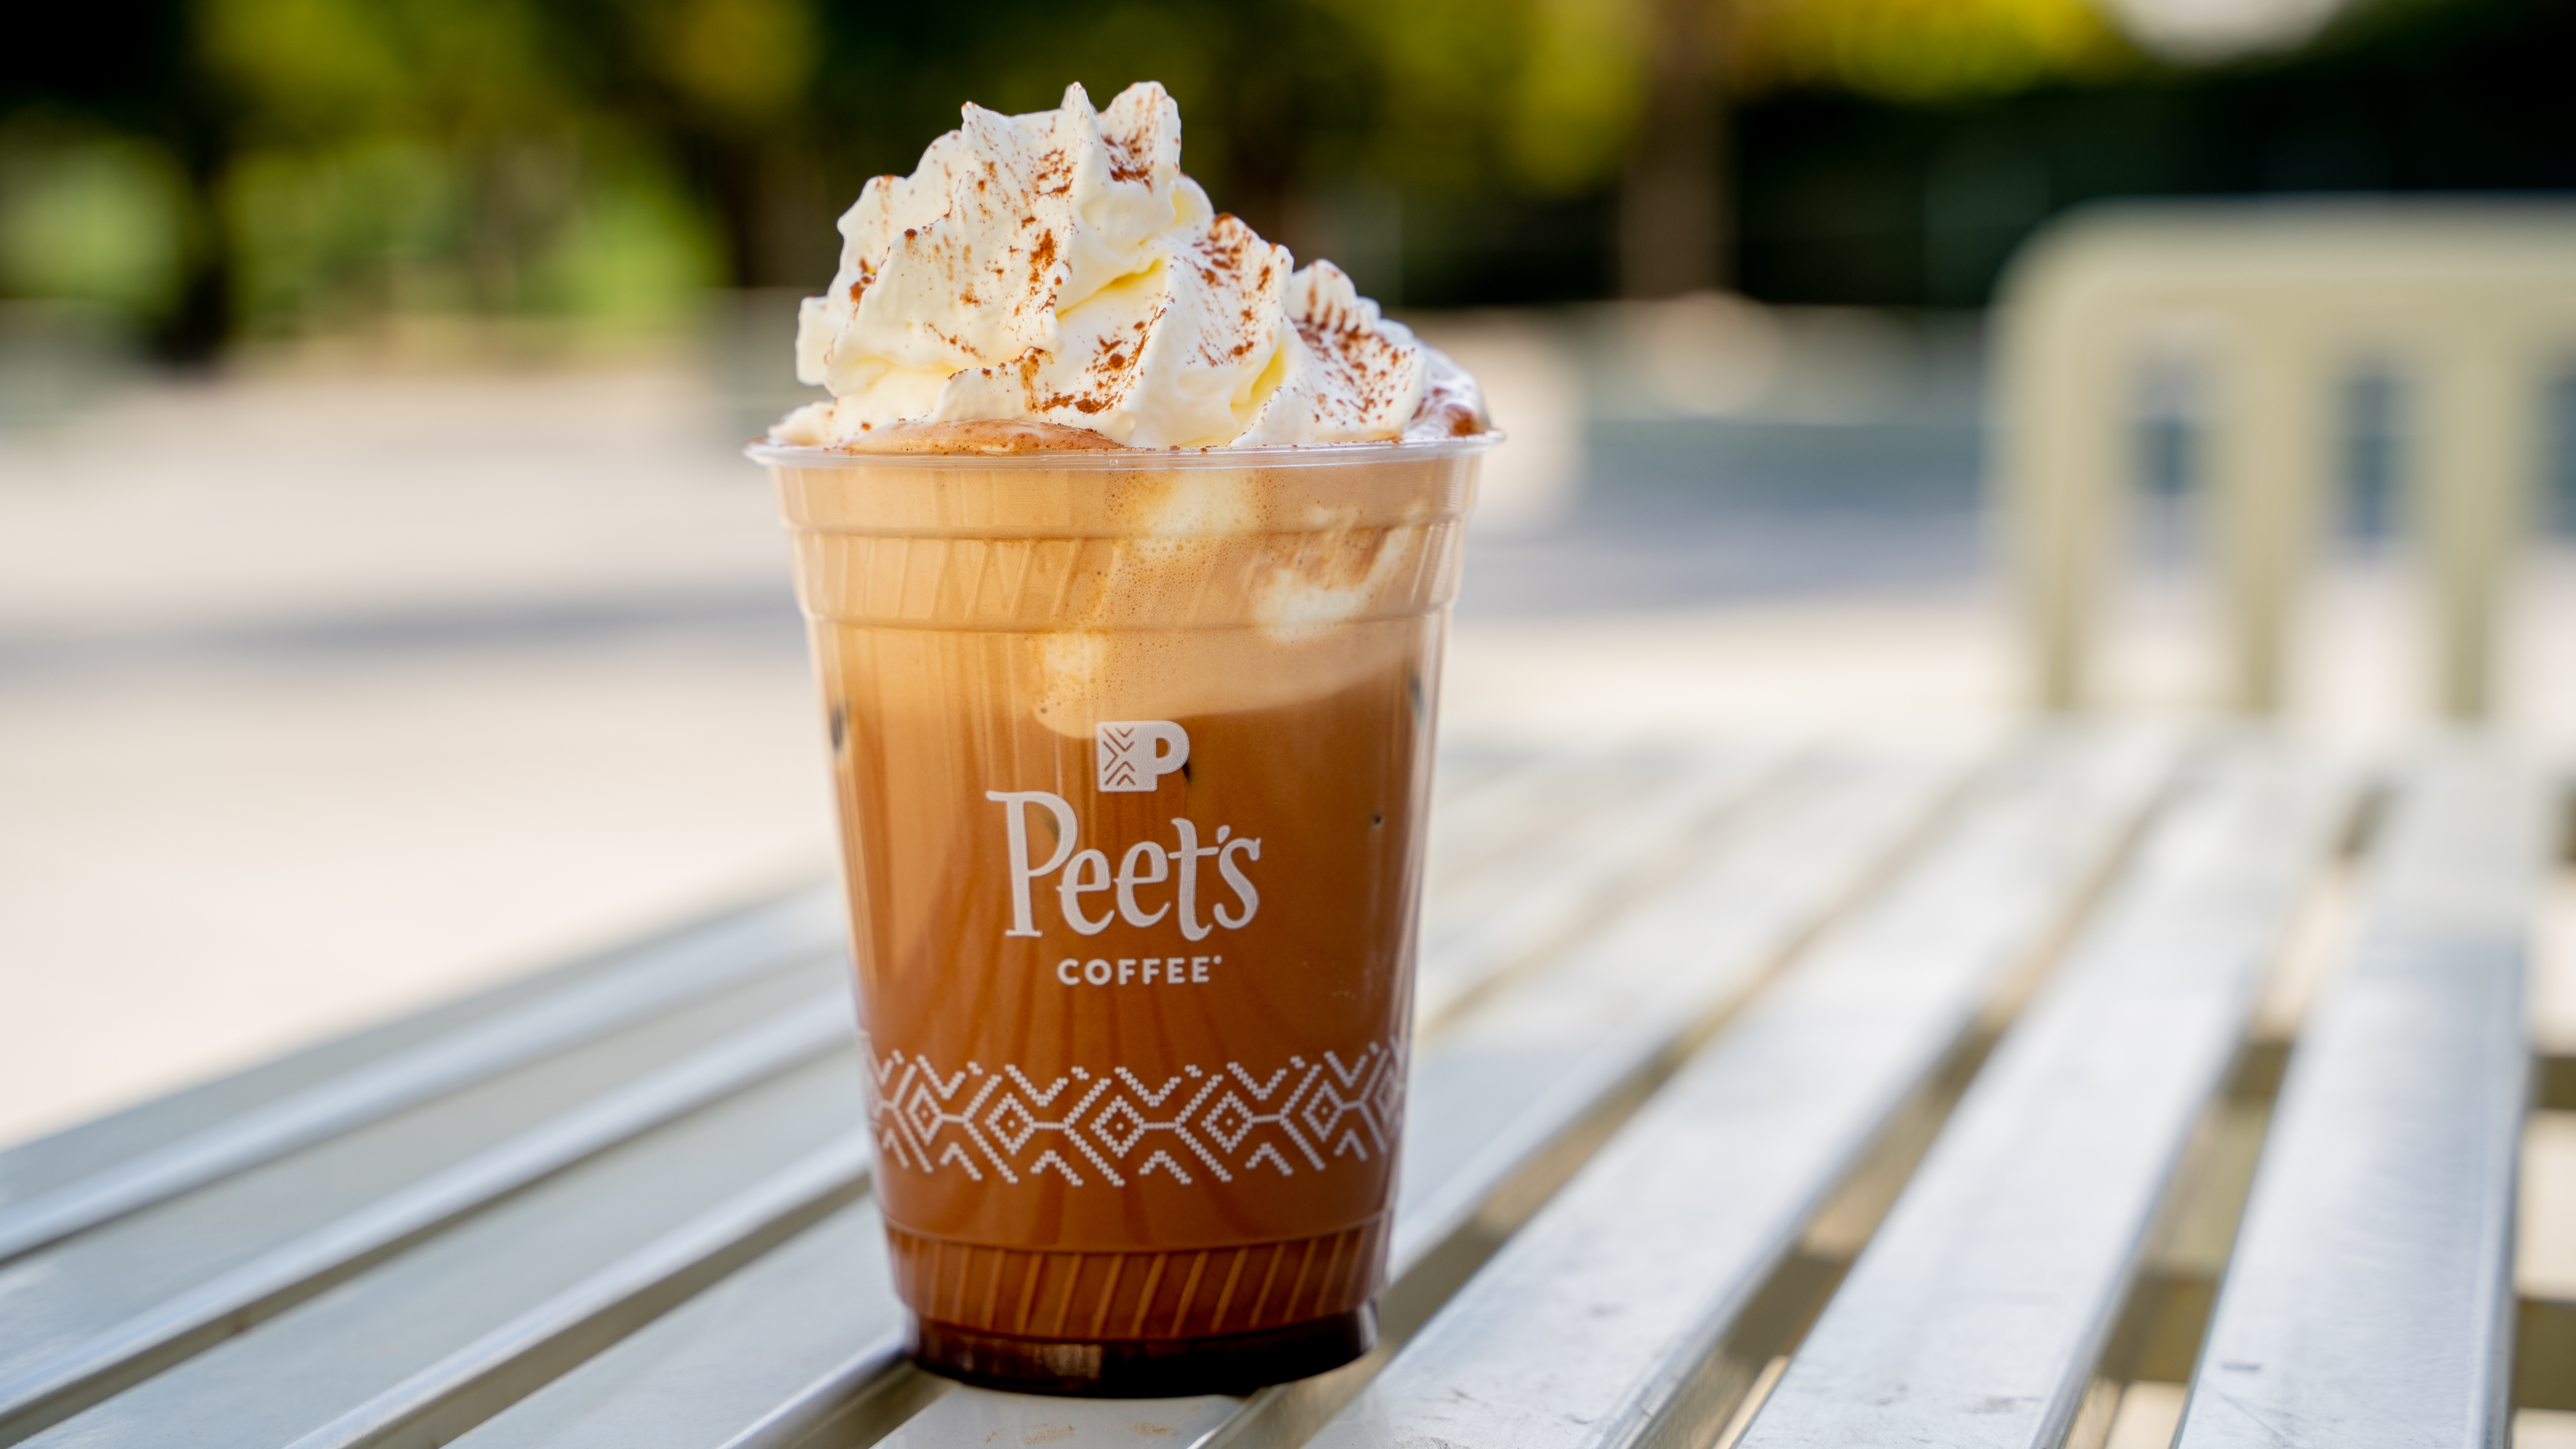 Peet's Coffee iced coffee with whipped cream